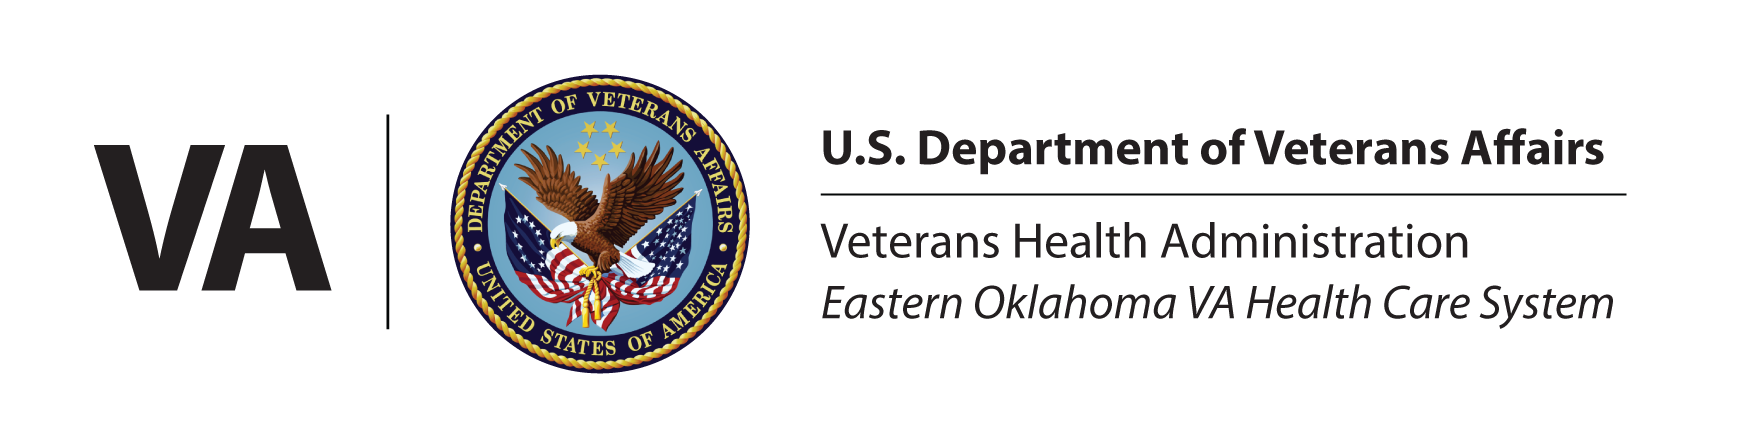 Eastern Oklahoma Veteran Administration Healthcare System Oklahoma